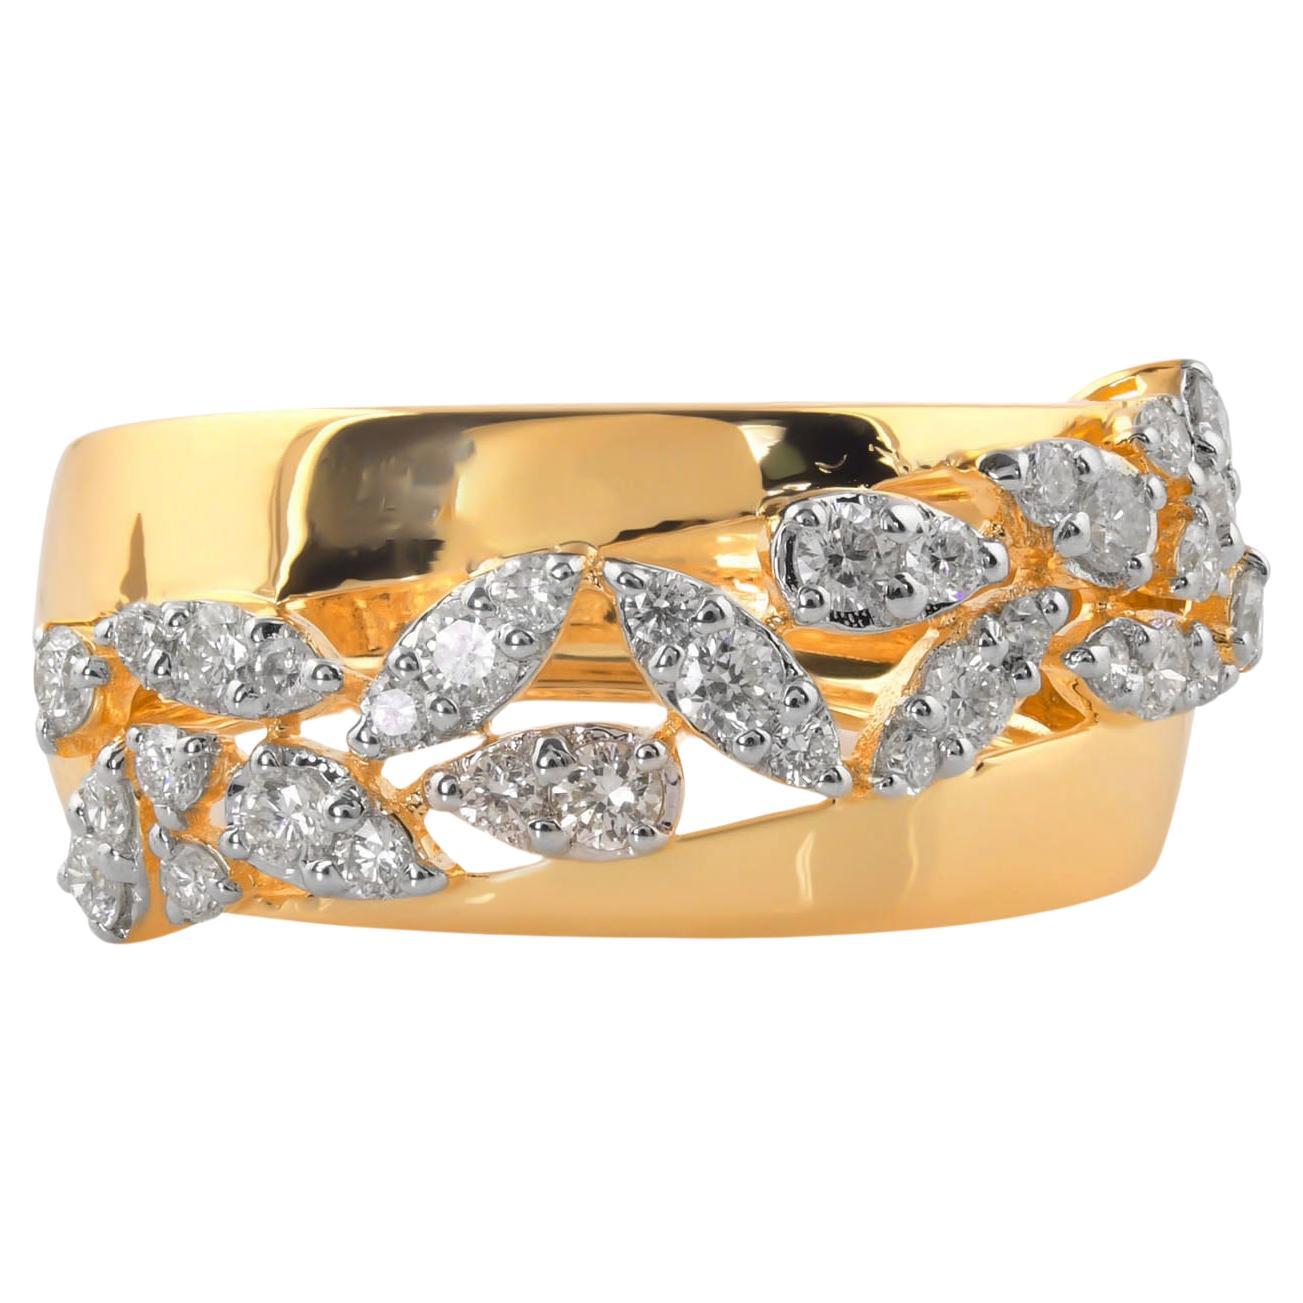 SI Clarity HI Color Diamond Dome Ring 14k White Yellow Gold Two Tone Jewelry (Bague dôme en or blanc et jaune 14k) en vente